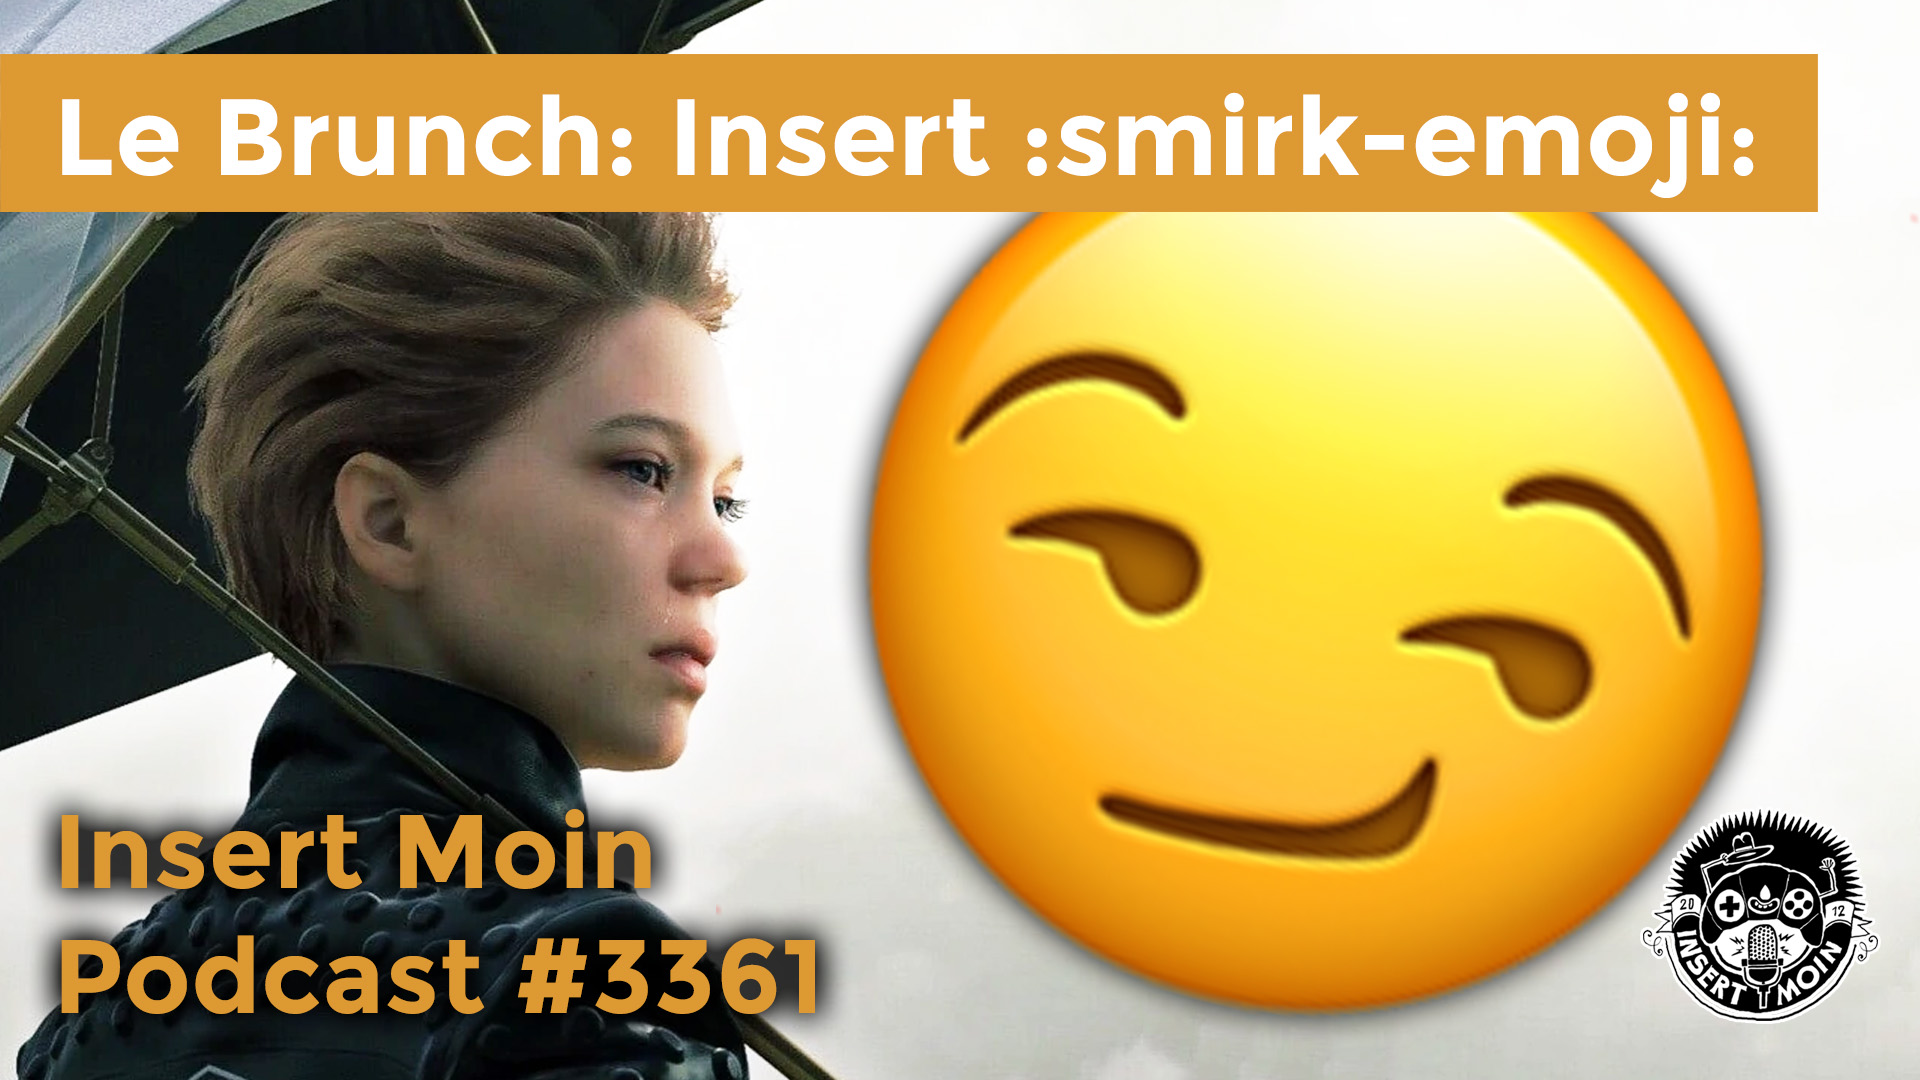 Le Brunch: Insert :smirking-emoji: